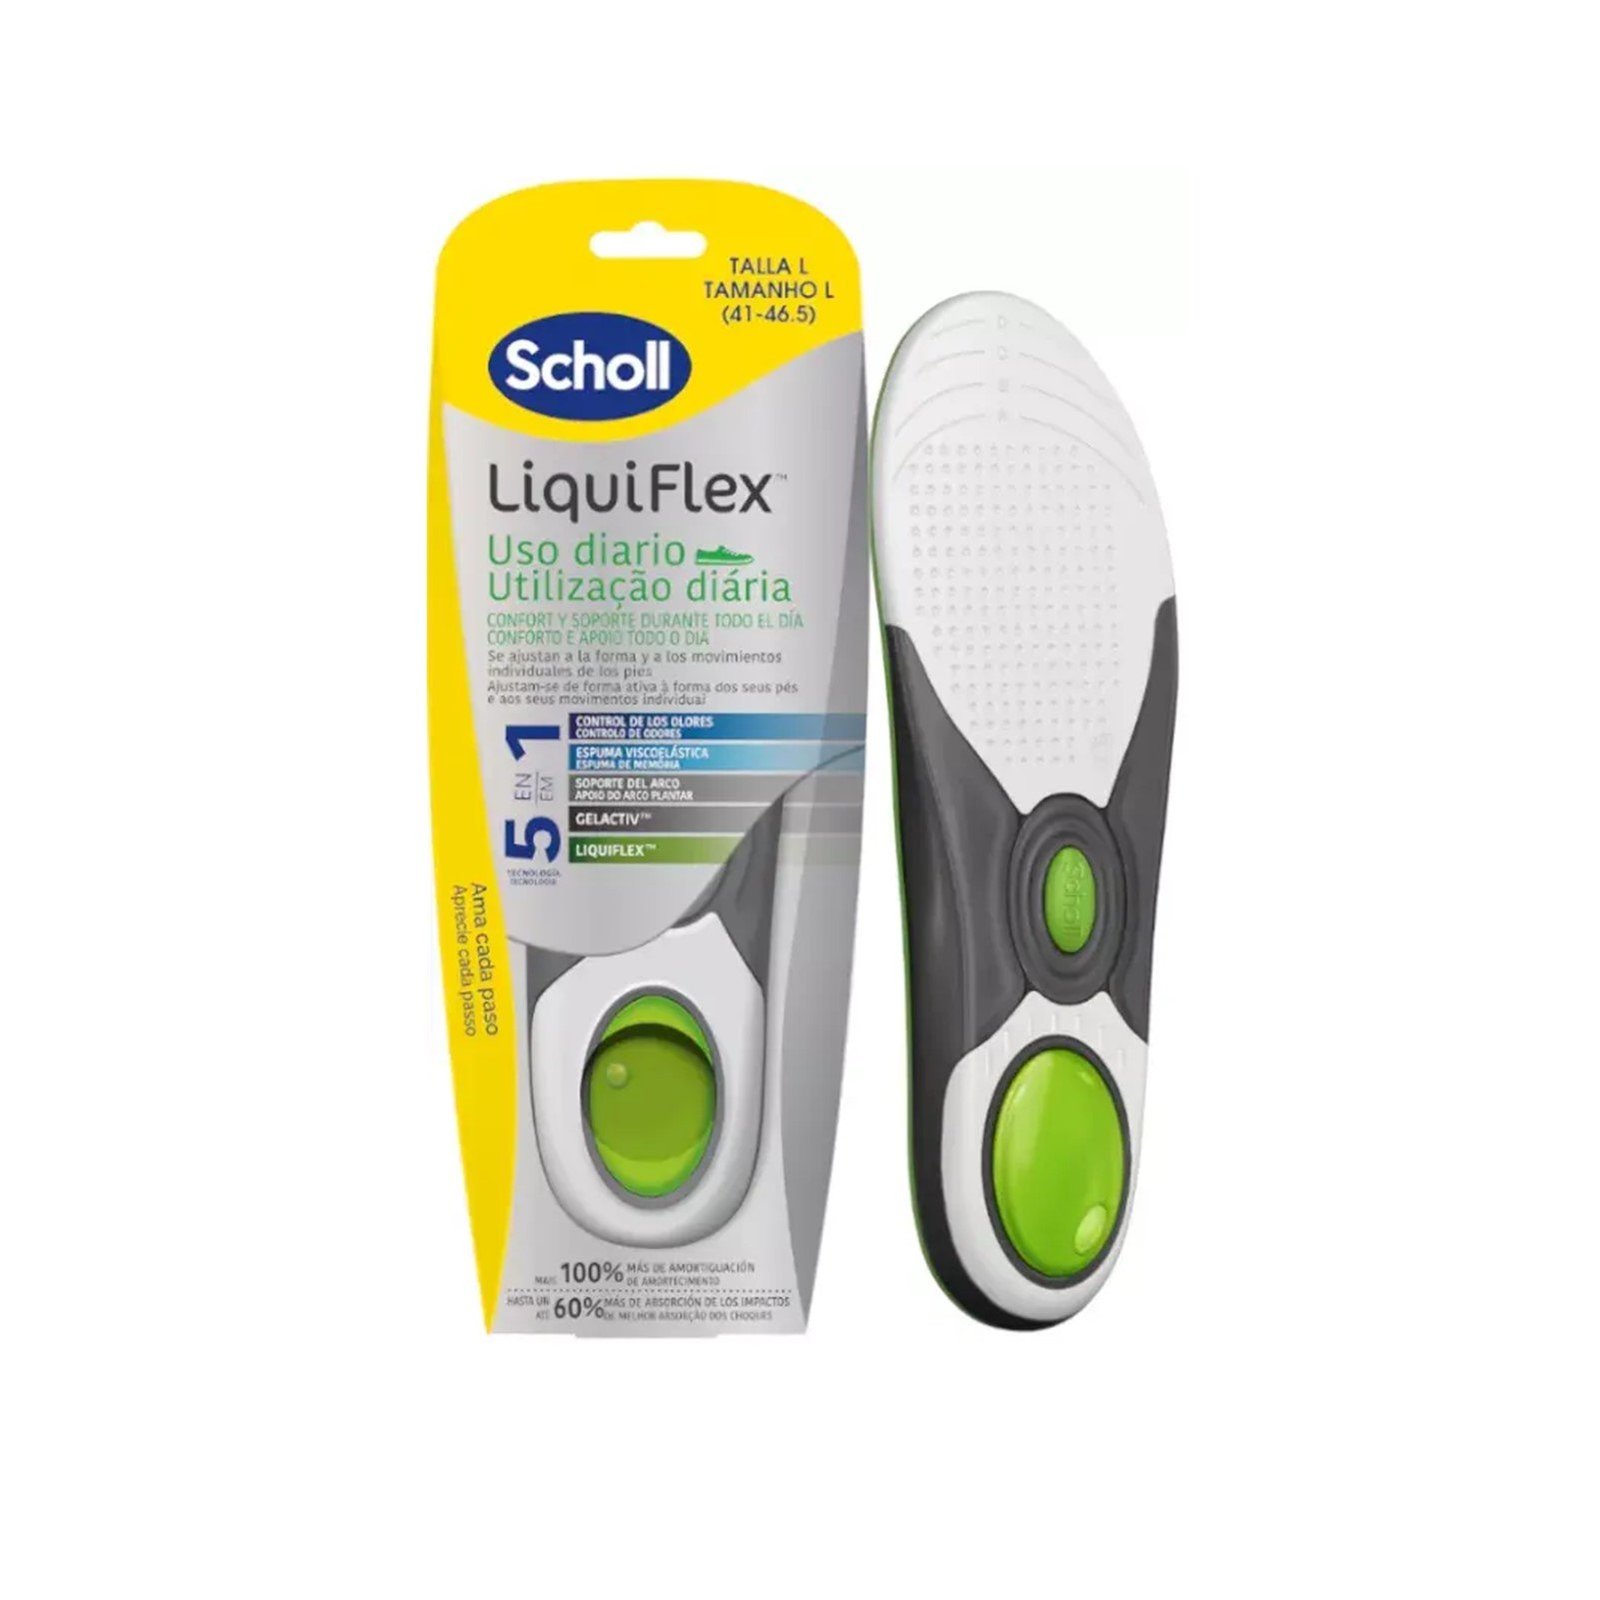 Scholl LiquiFlex 5-In-1 Everyday Insoles L x2